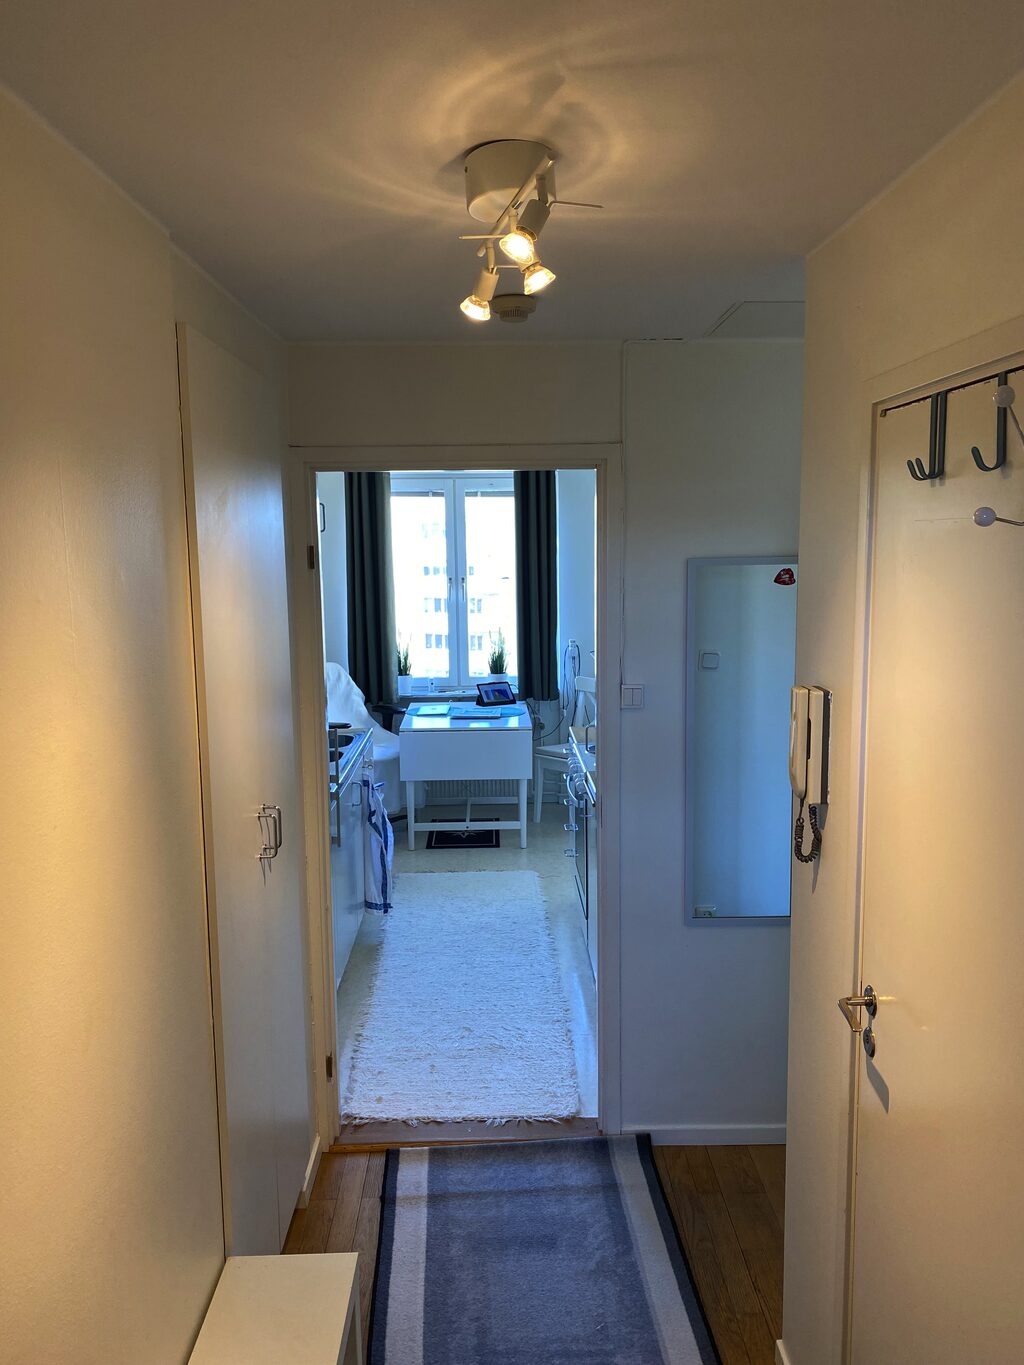 Lägenhetsbyte - Richertsgatan 4, 412 60 Göteborg